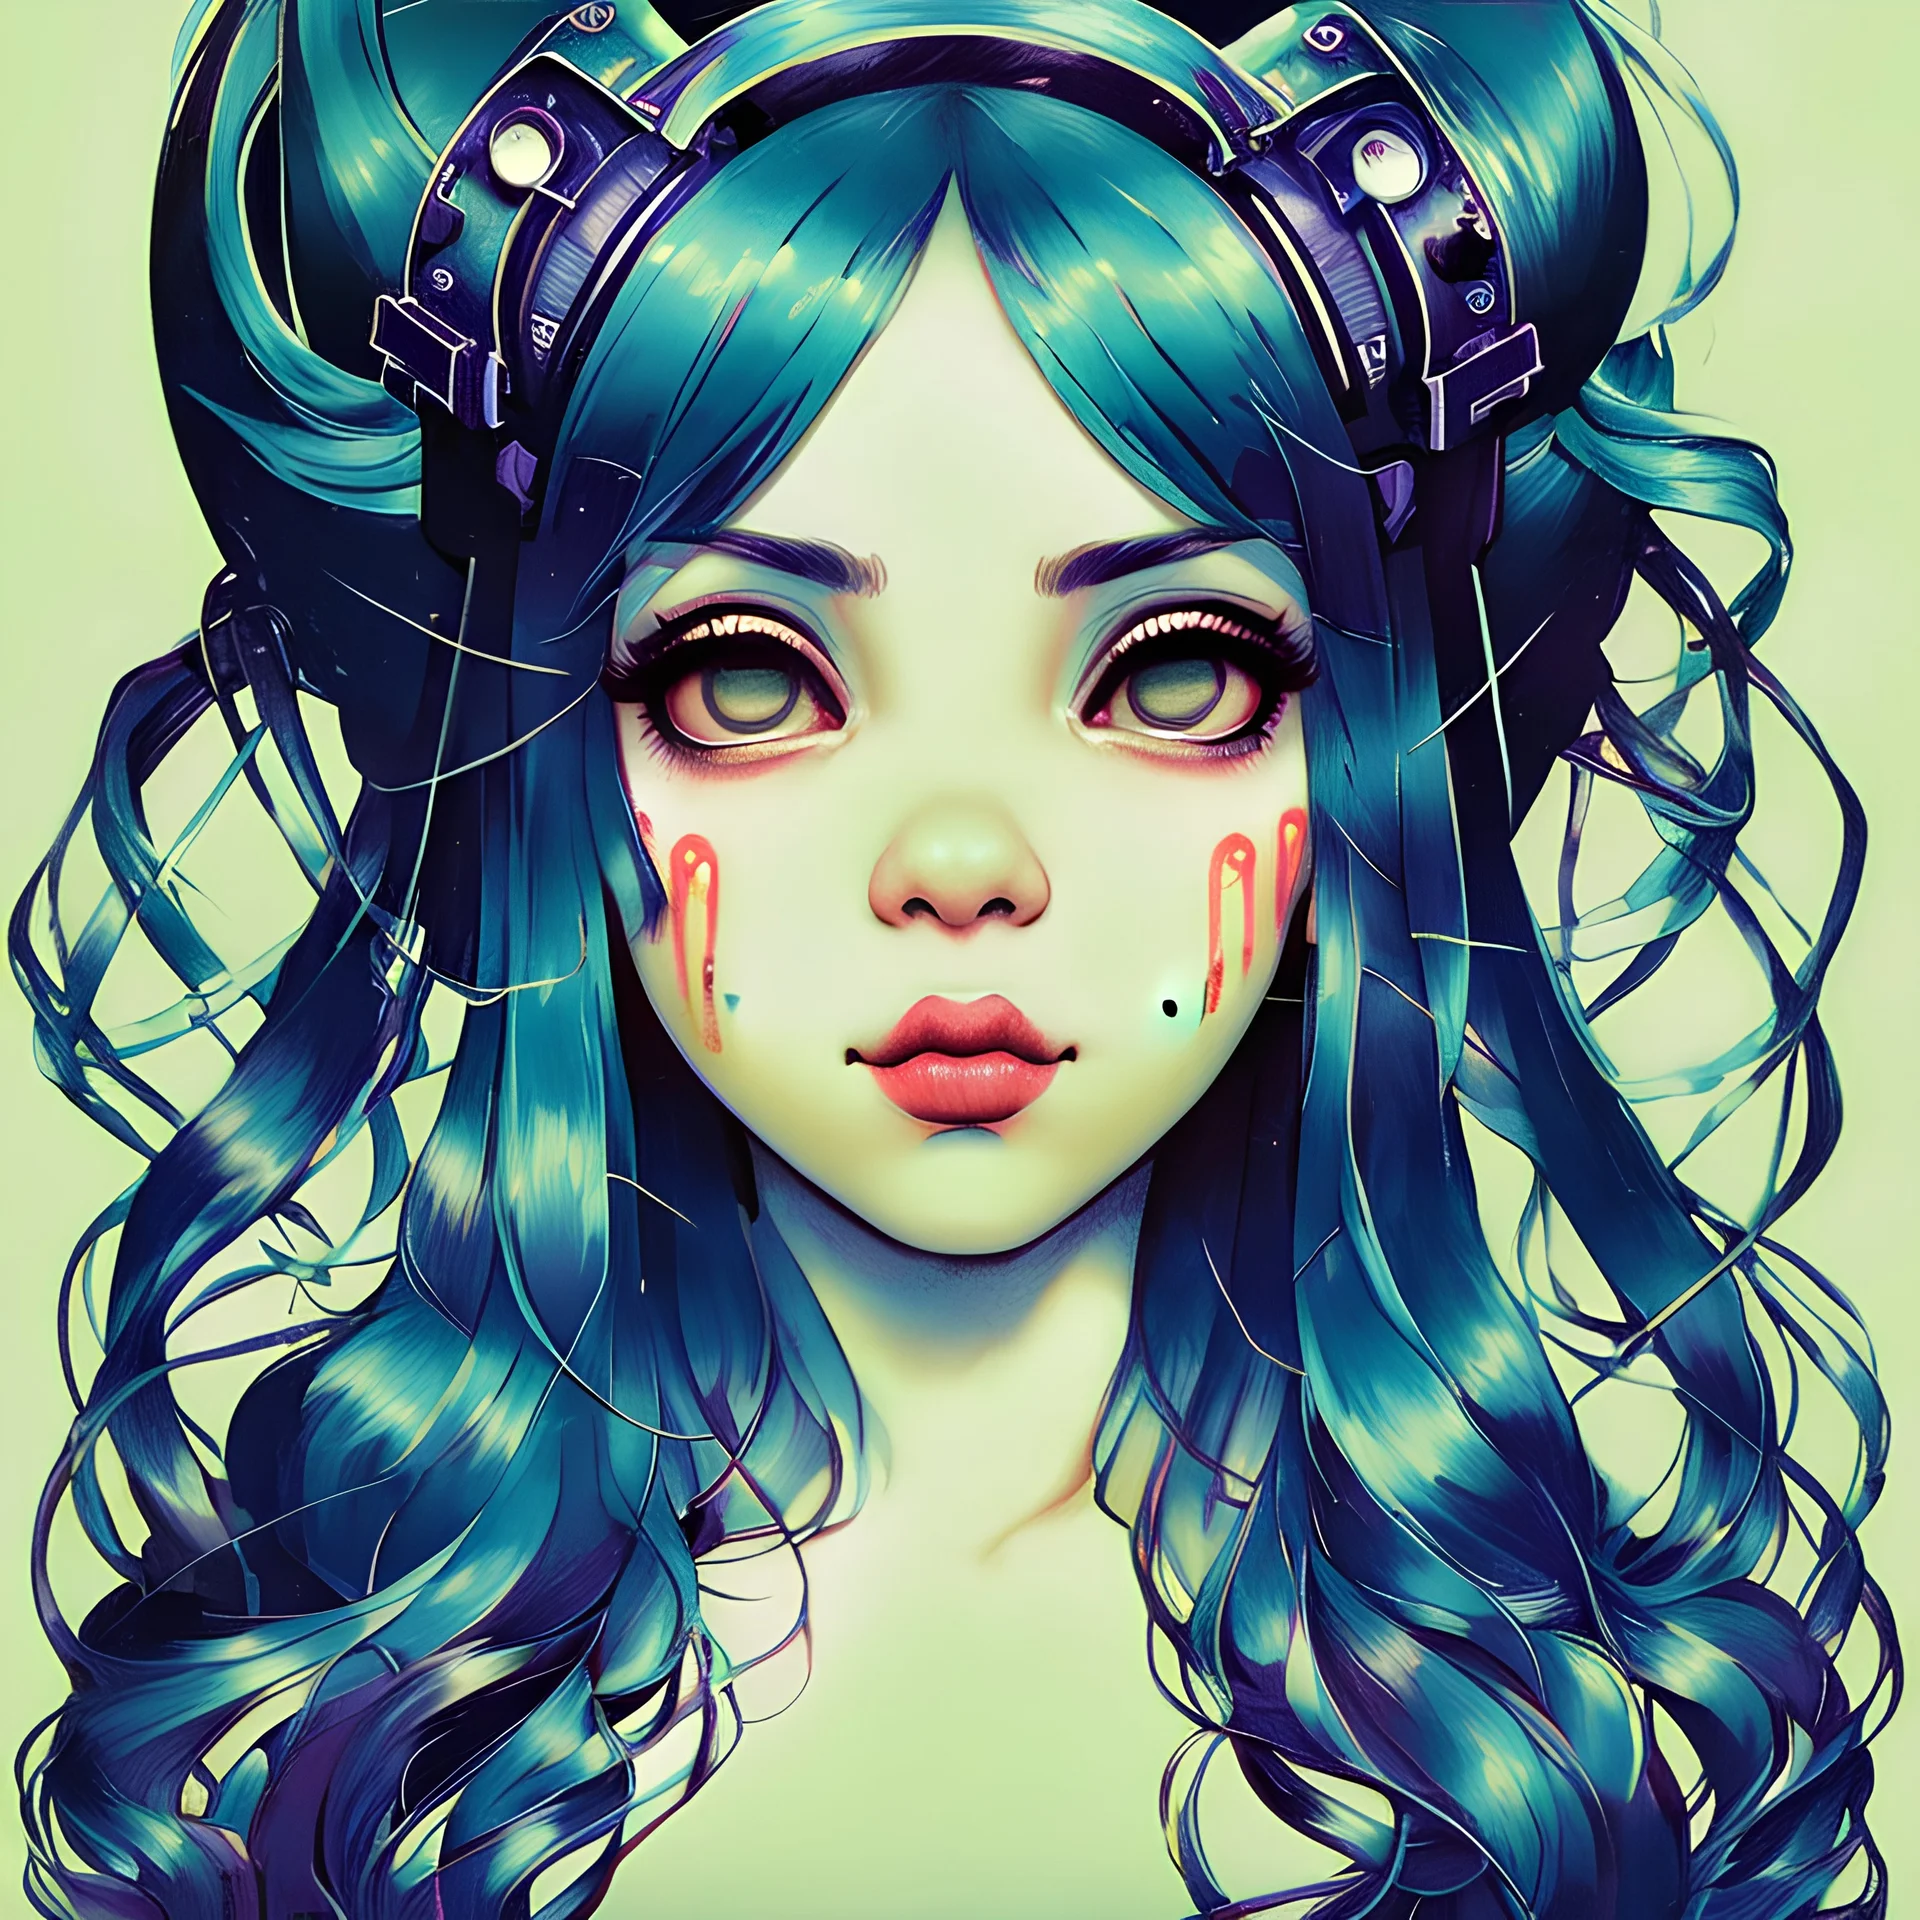 singer Melanie Martinez face, beautiful cyberpunk, hyperdetailed, illustration by Katsushika Hokusai, darkblue tones,